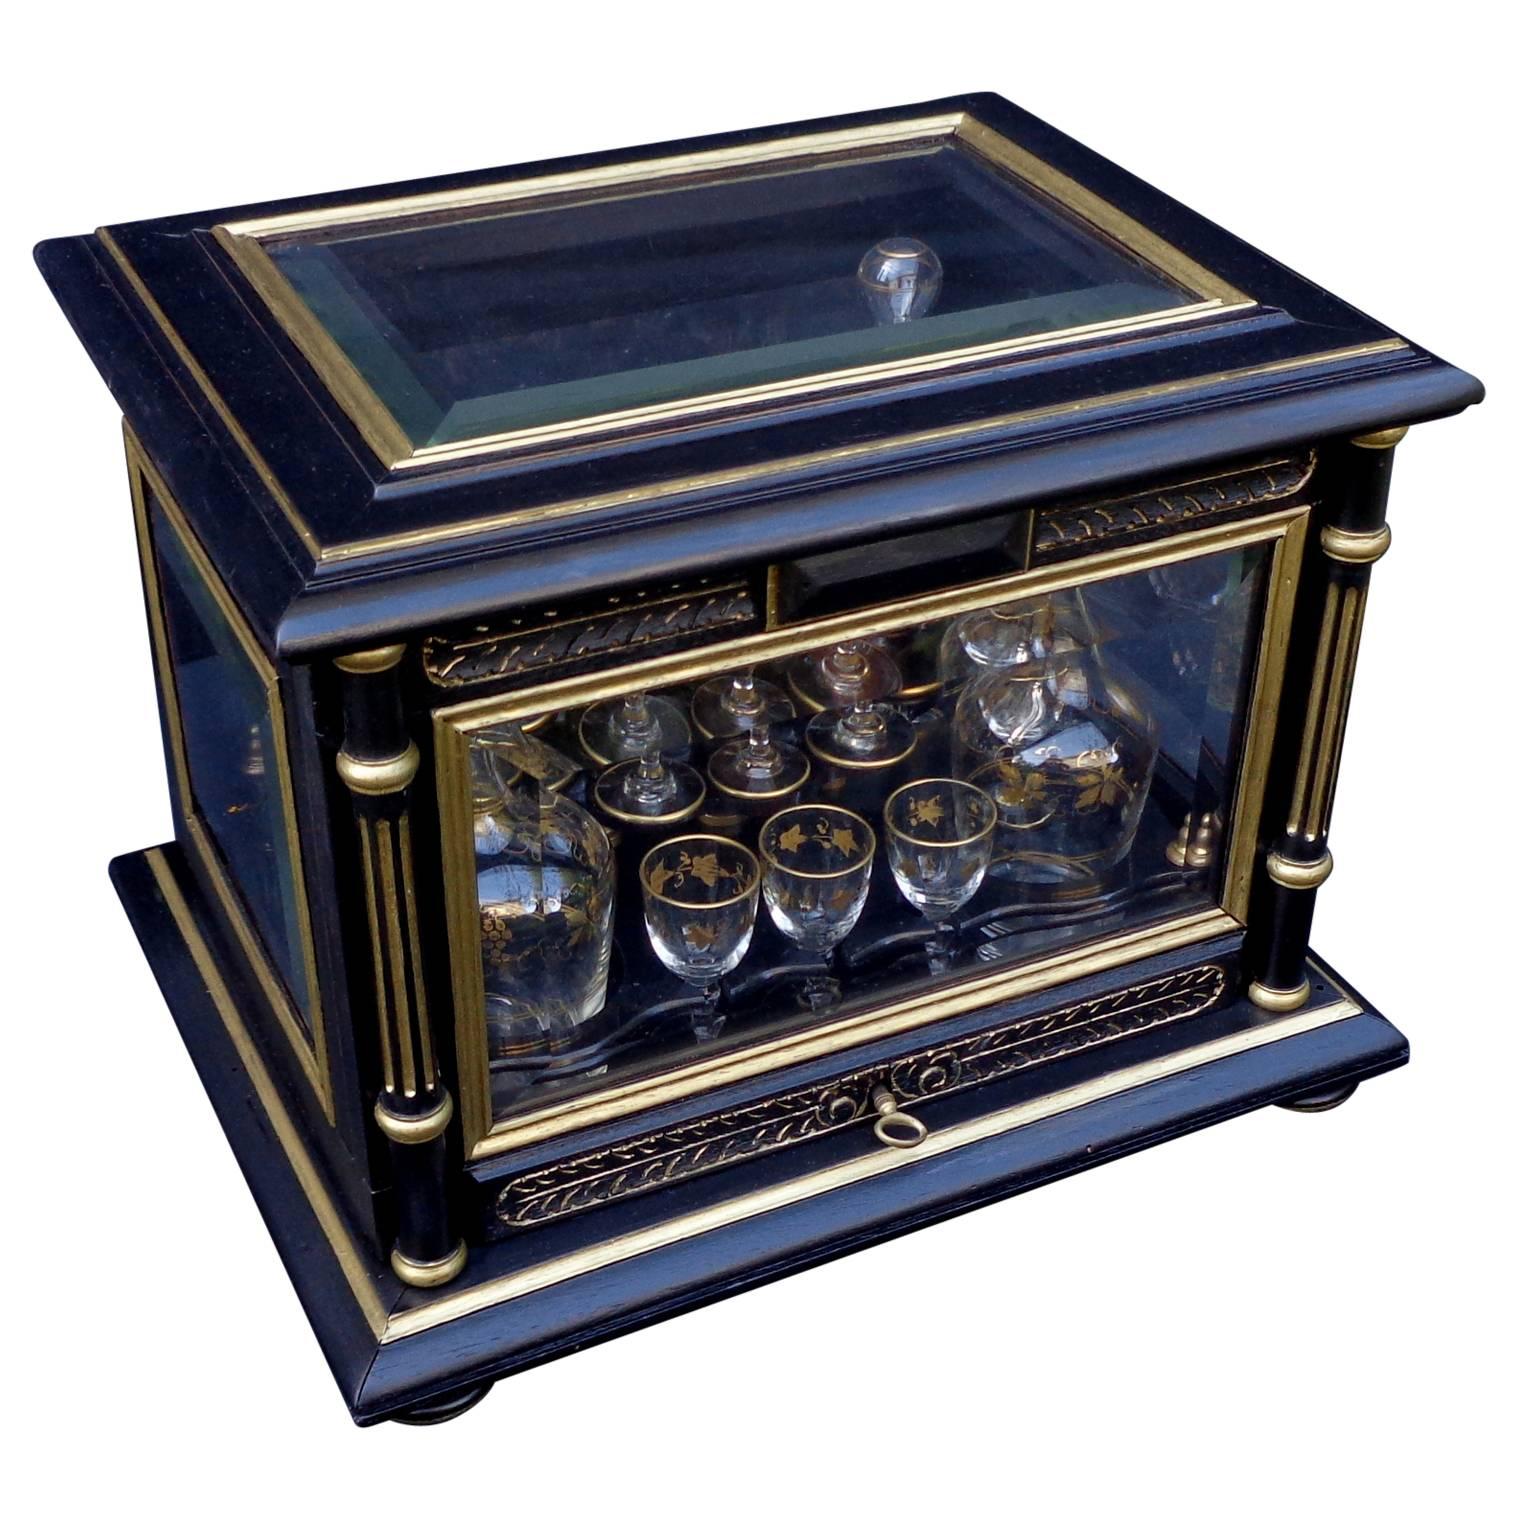 Tantalus Liquor Box with Glasses in Black and Gold, 19th Century, Napoleon III